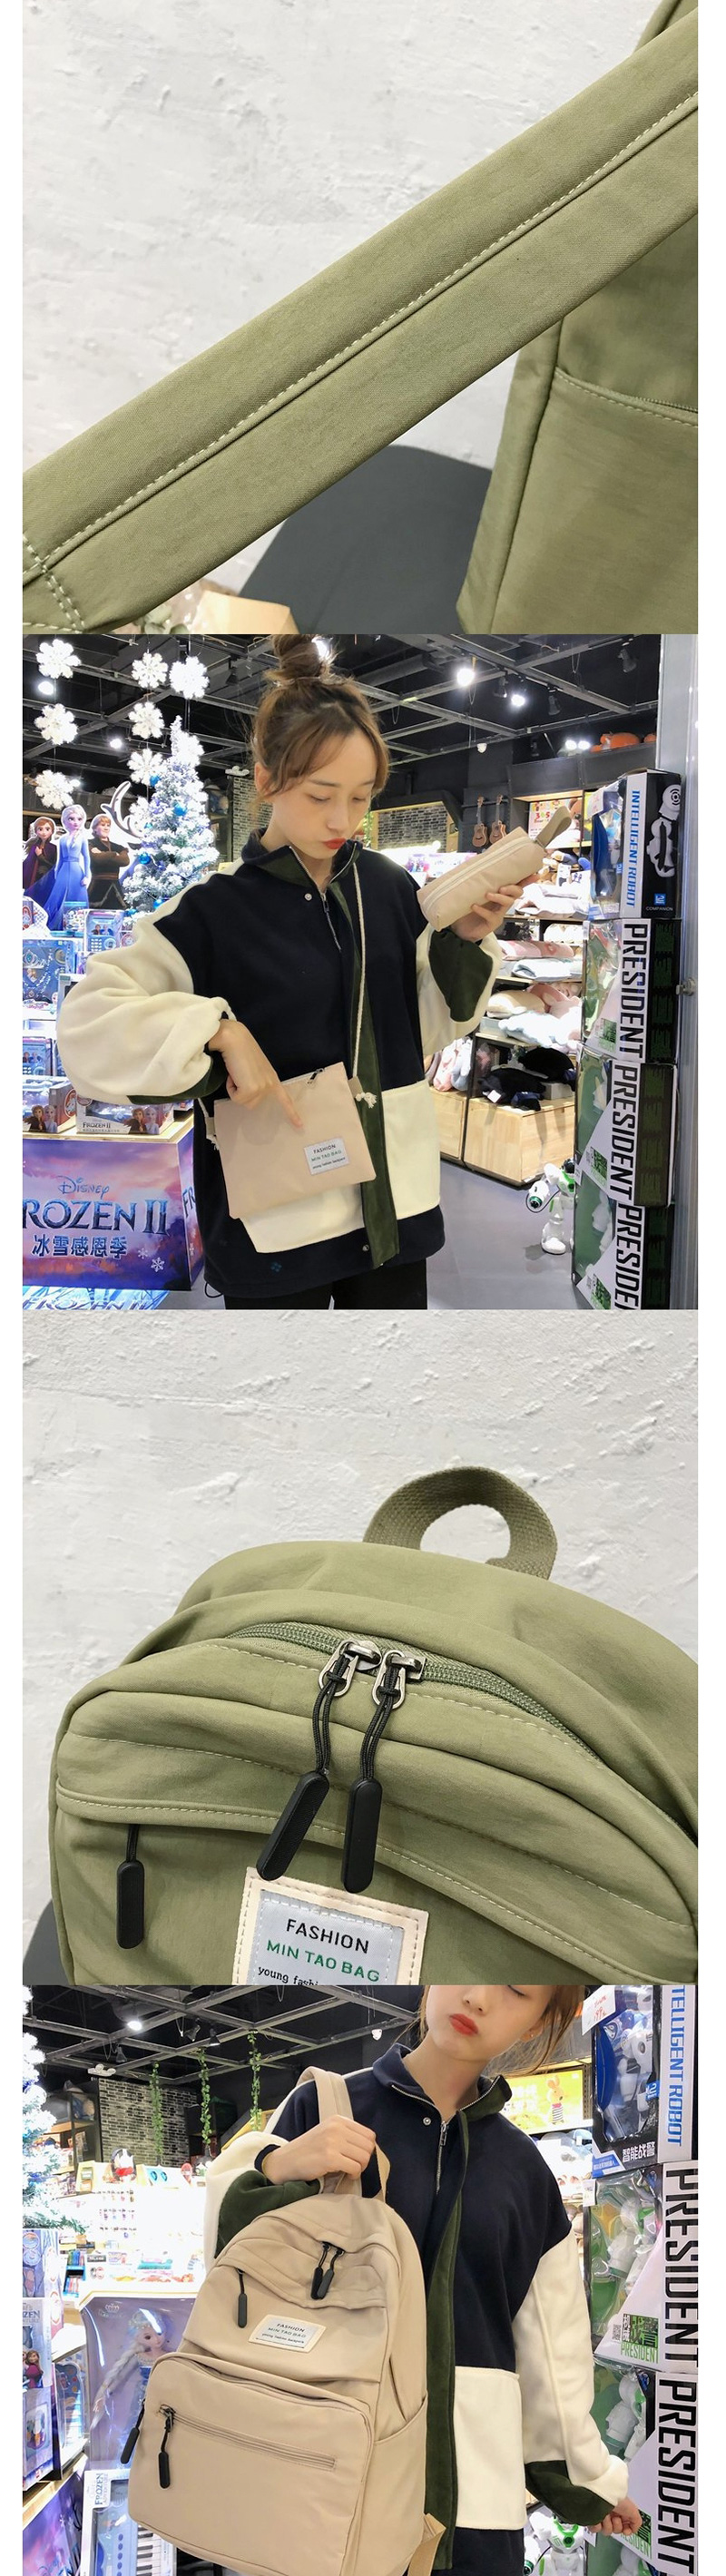 Fashion Dark Green Three-piece Waterproof Backpack,Backpack